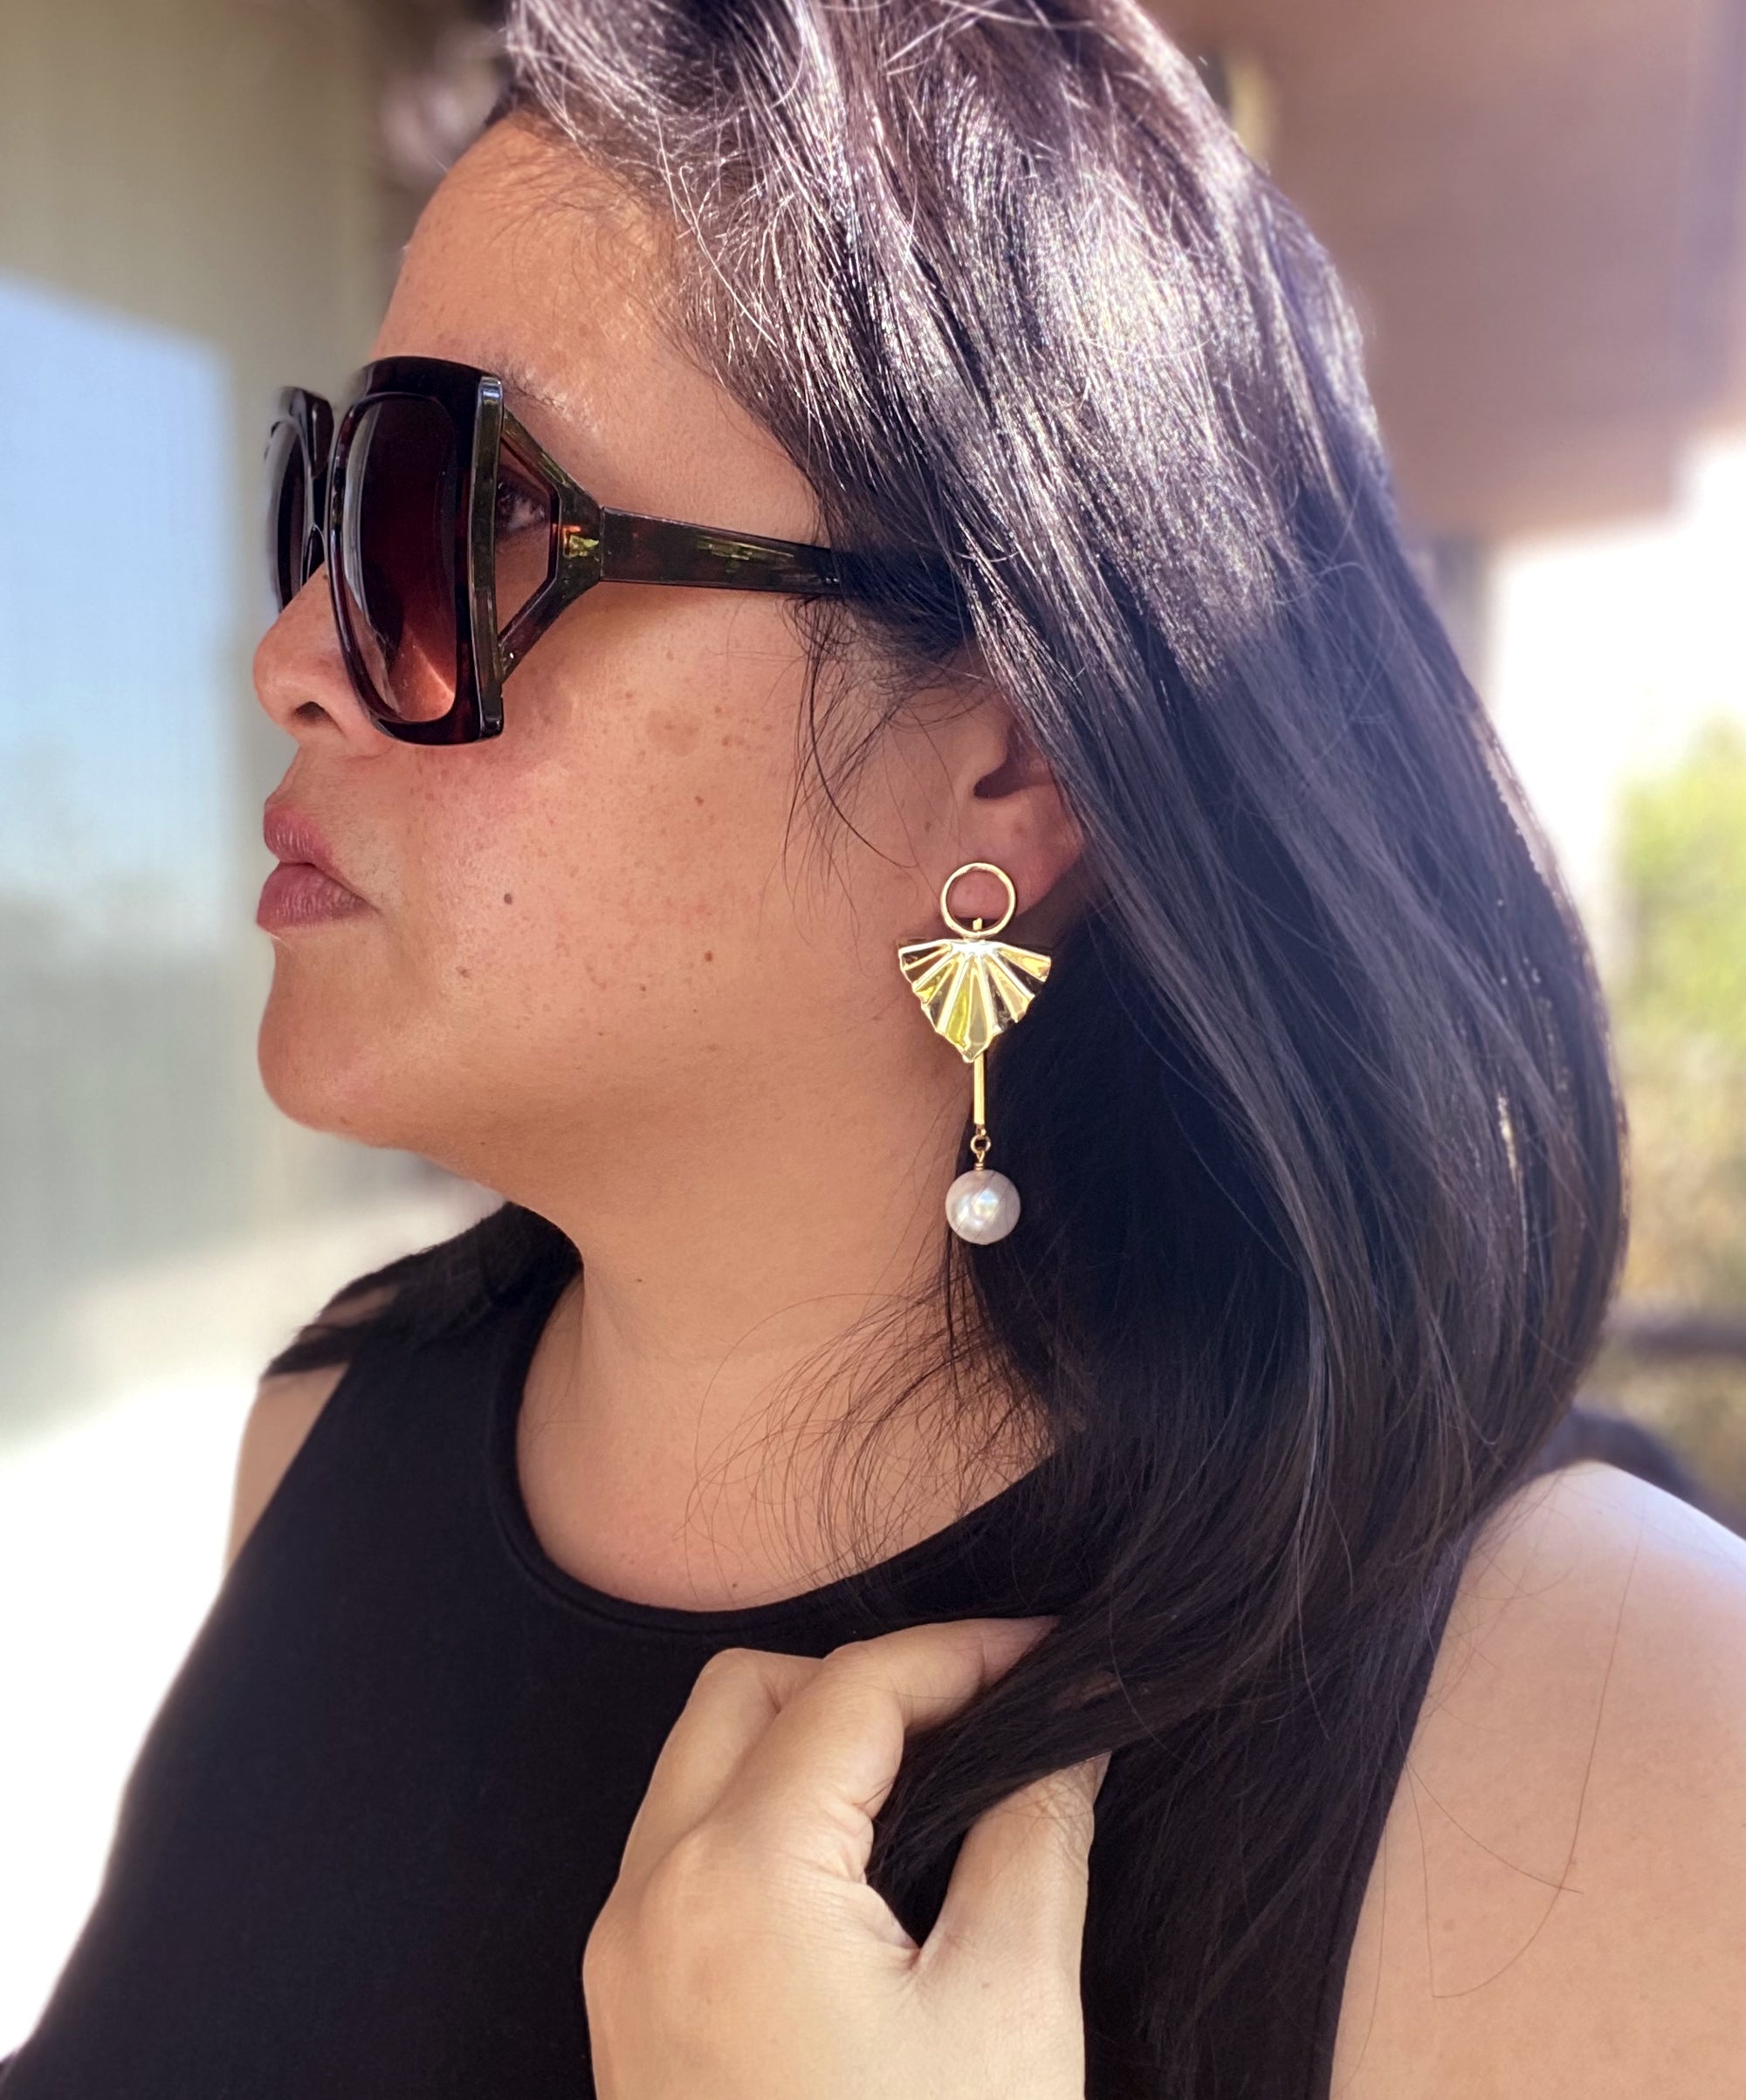 Jenny Dayco wearing kaia earrings